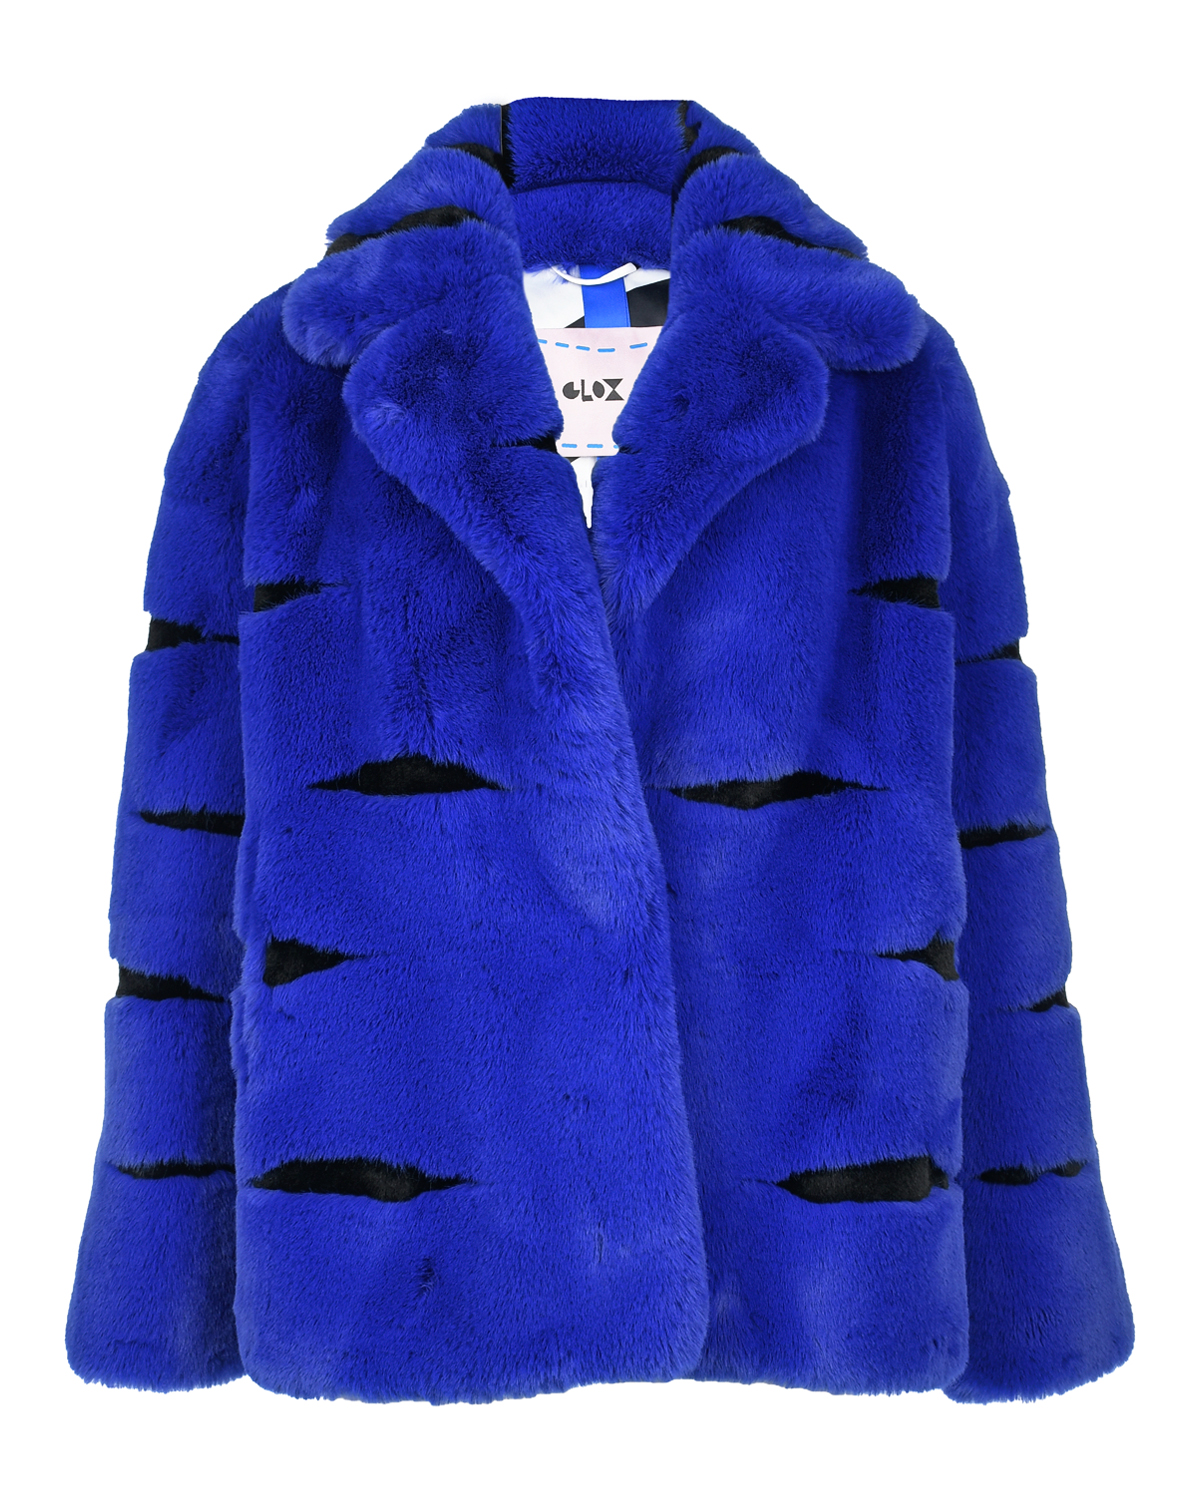 Синяя куртка из эко-меха Glox, размер 40, цвет синий - фото 1